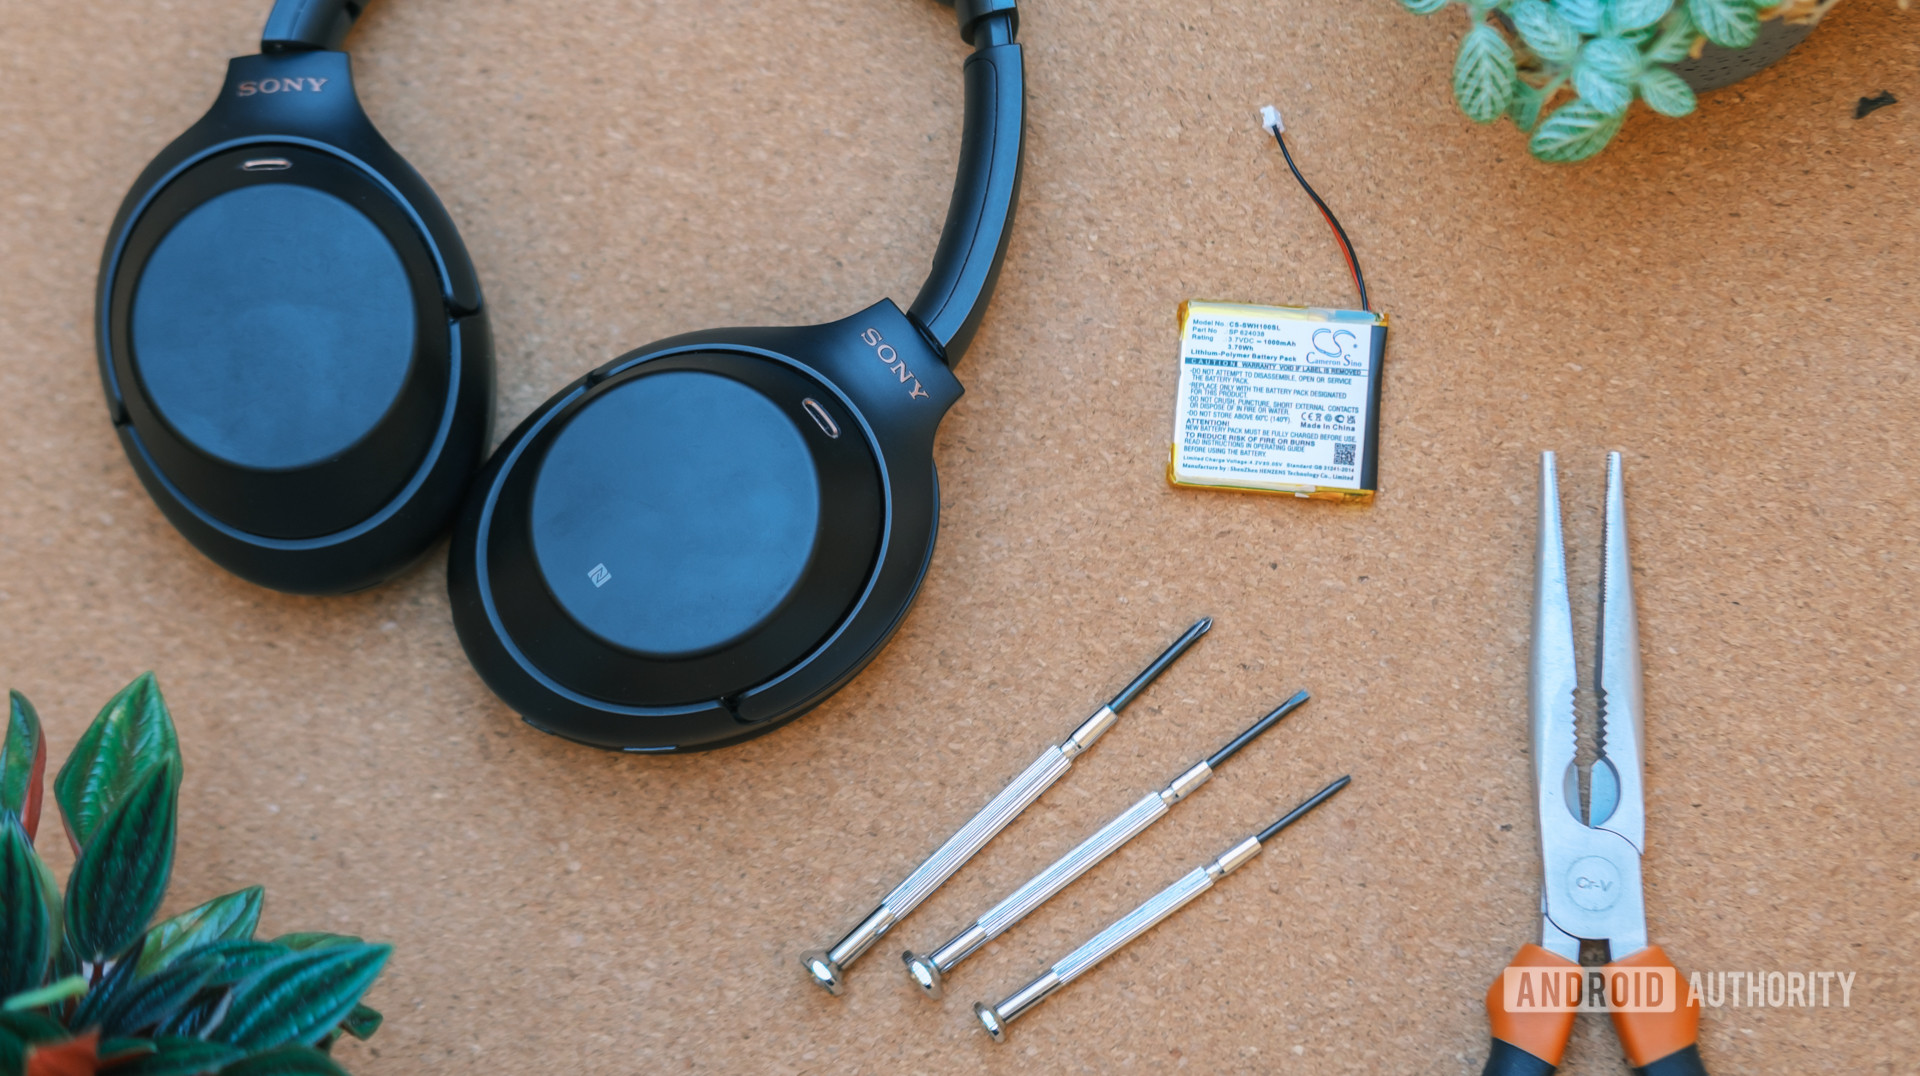 Sony WH 1000MX3 repair showing the headphones alongside various tools.